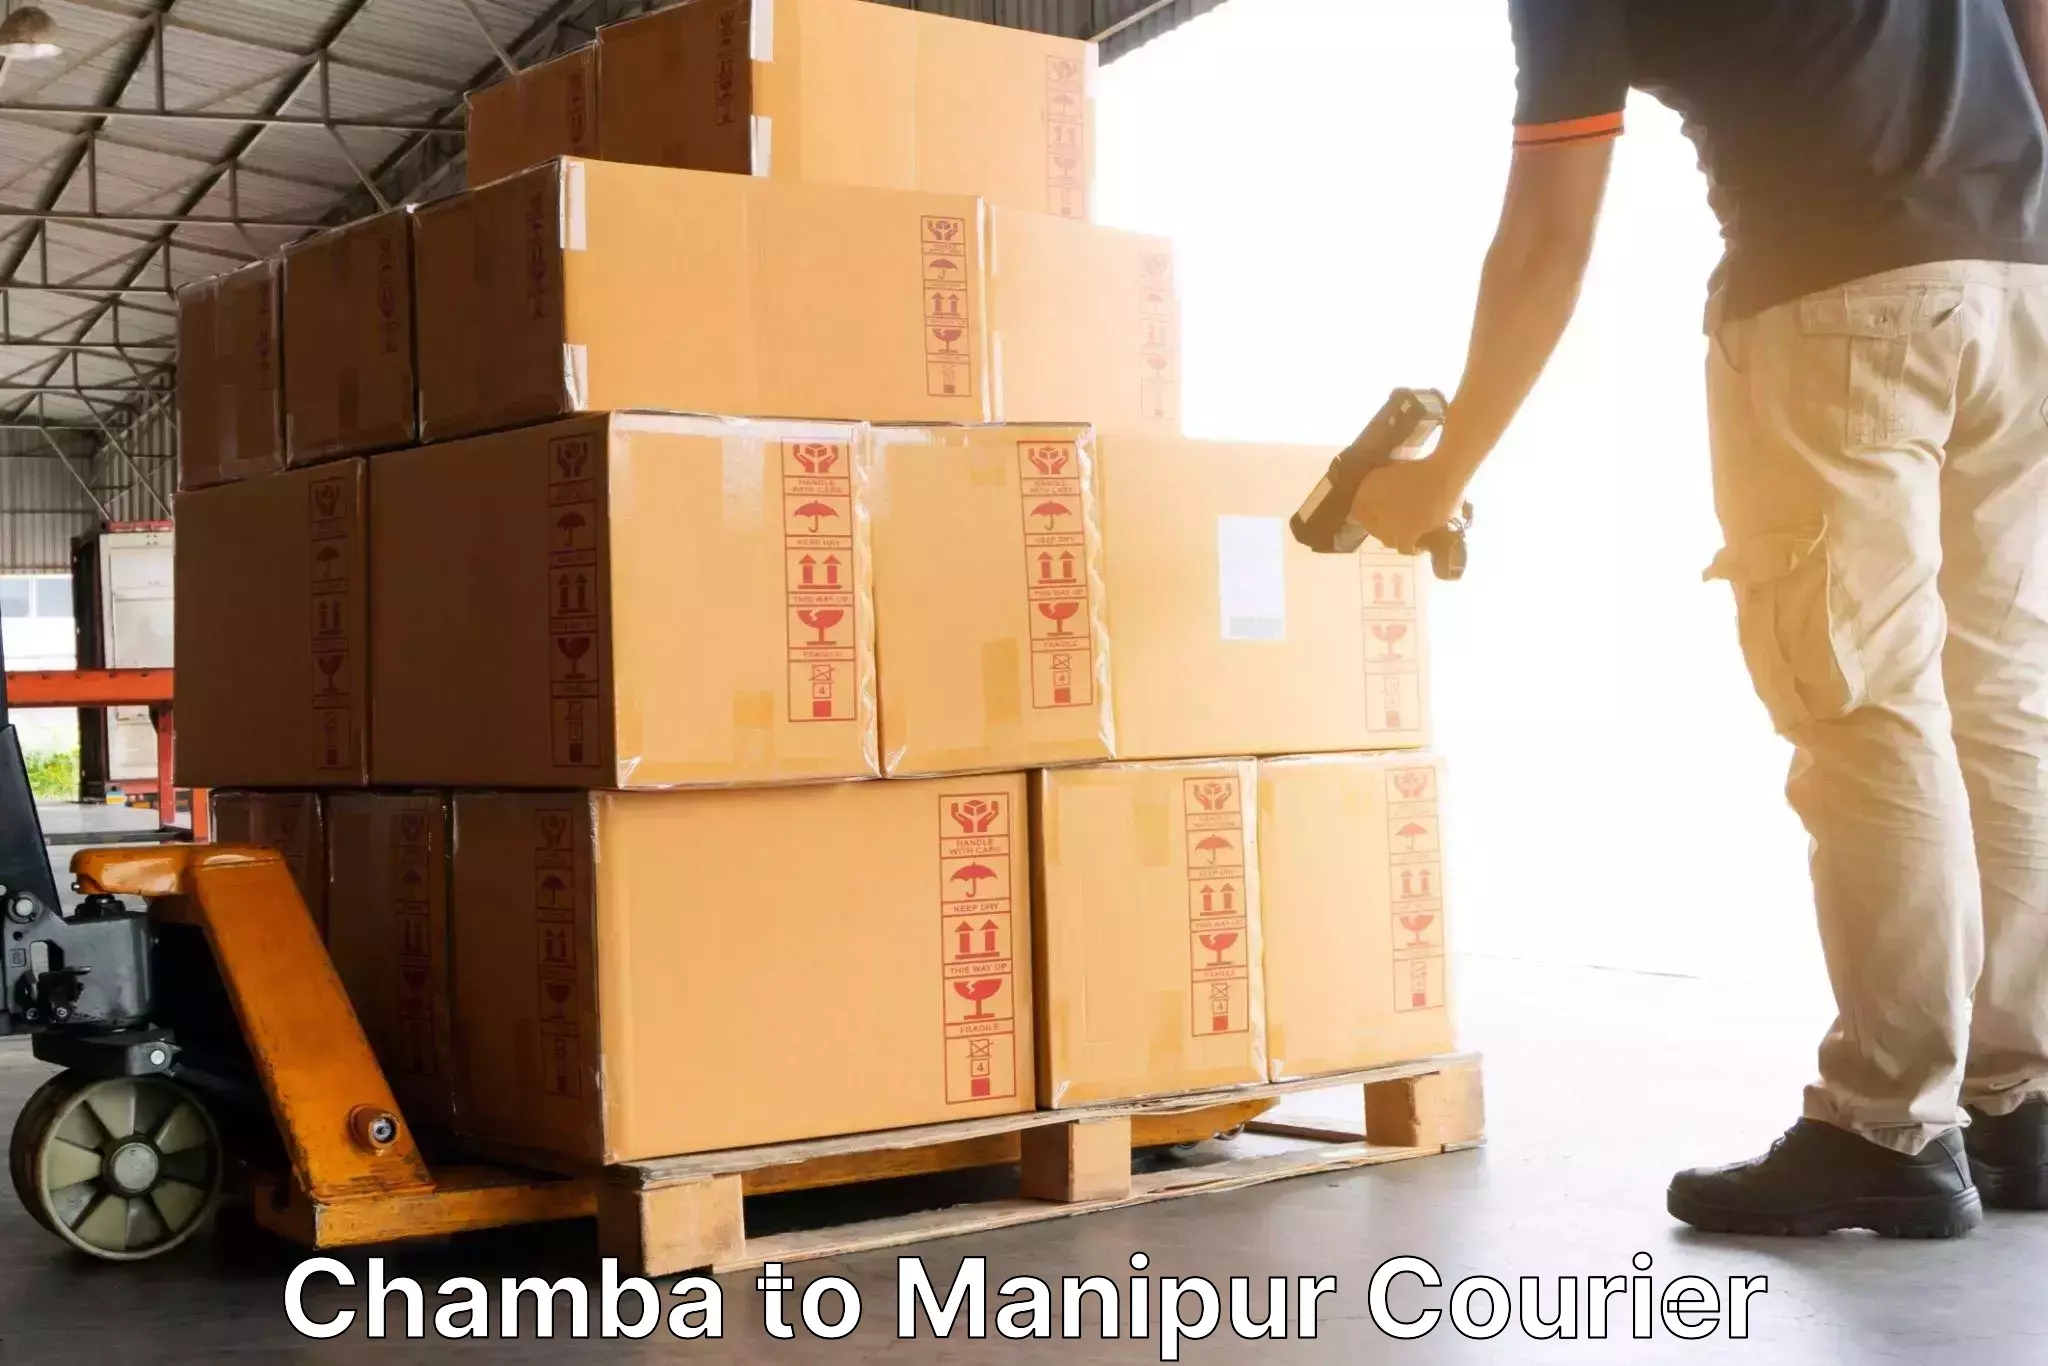 Courier service comparison Chamba to Jiribam